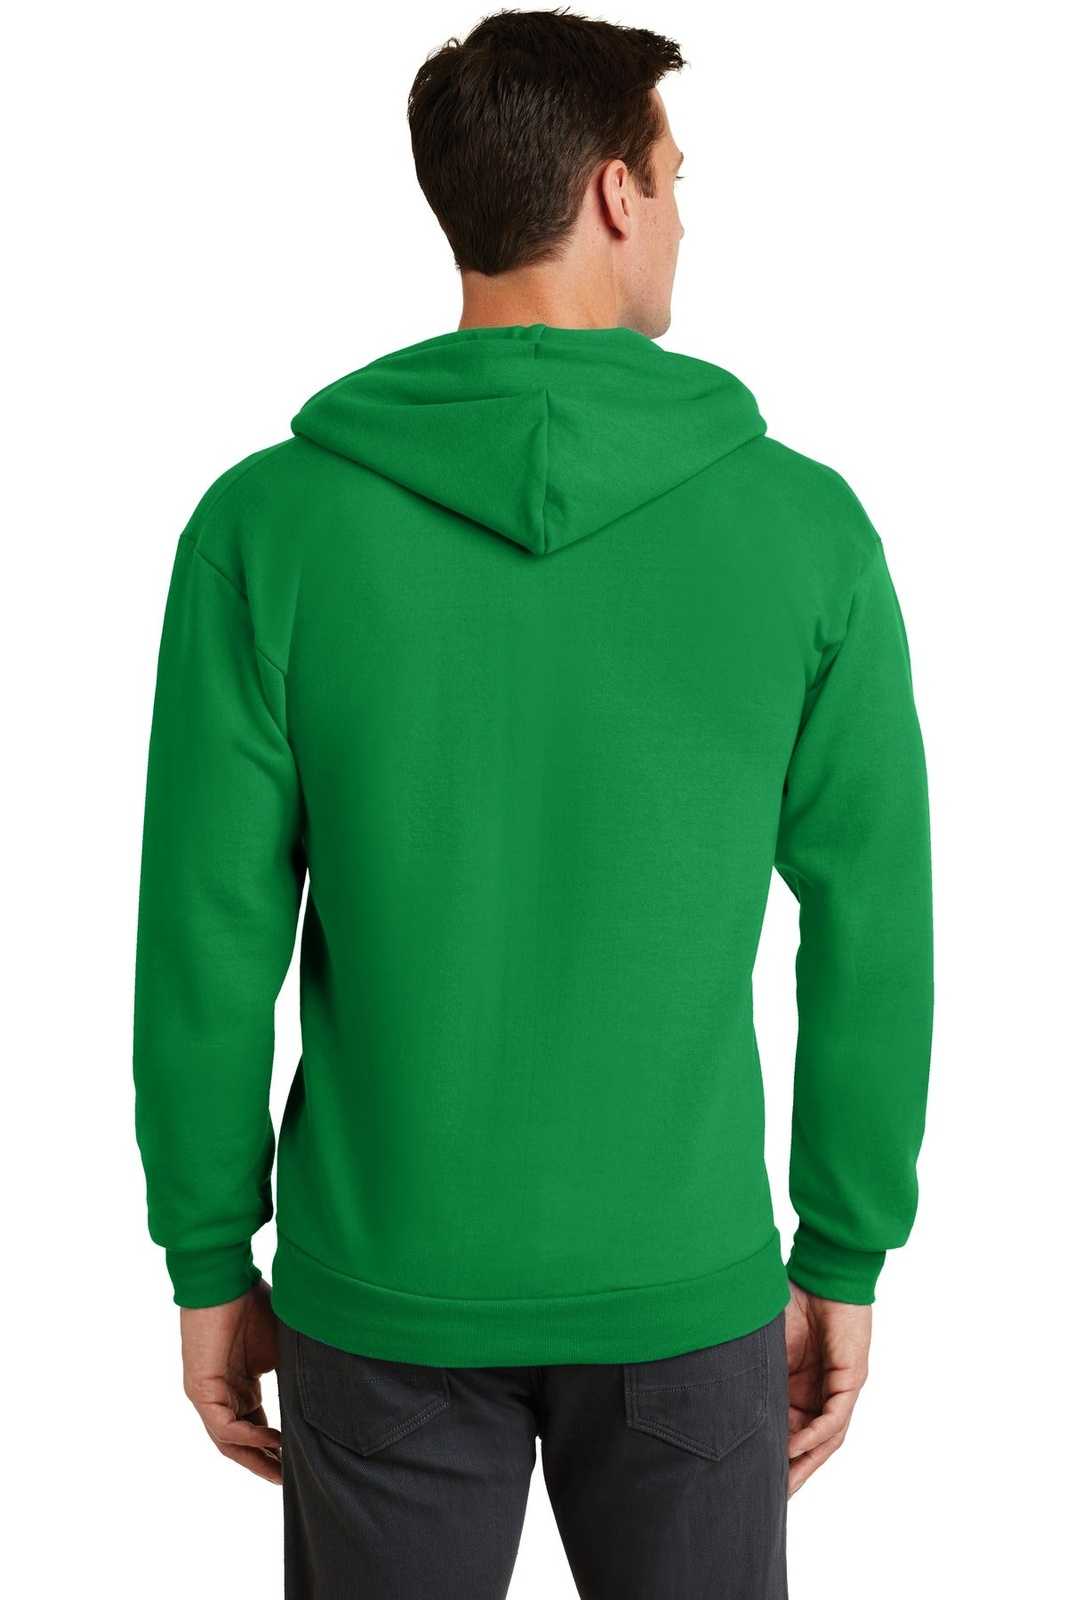 Port & Company PC78ZH Core Fleece Full-Zip Hooded Sweatshirt - Clover Green - HIT a Double - 1